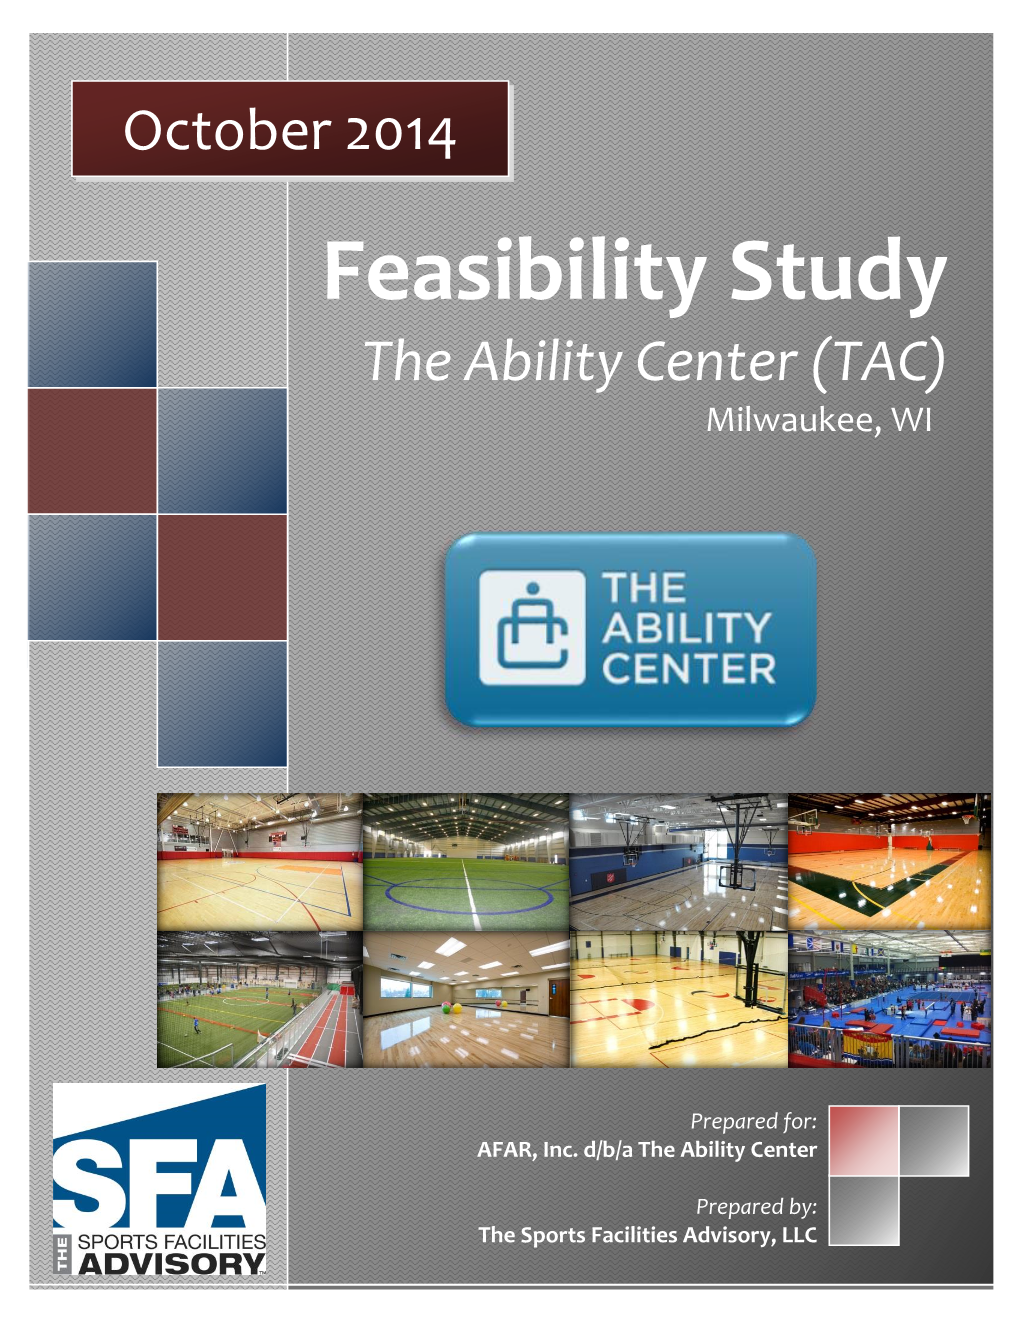 Feasibility Studystudy Powder Ridge Mountain Park the Ability Center& Resort(TAC) Middlefield,Milwaukee, CT WI